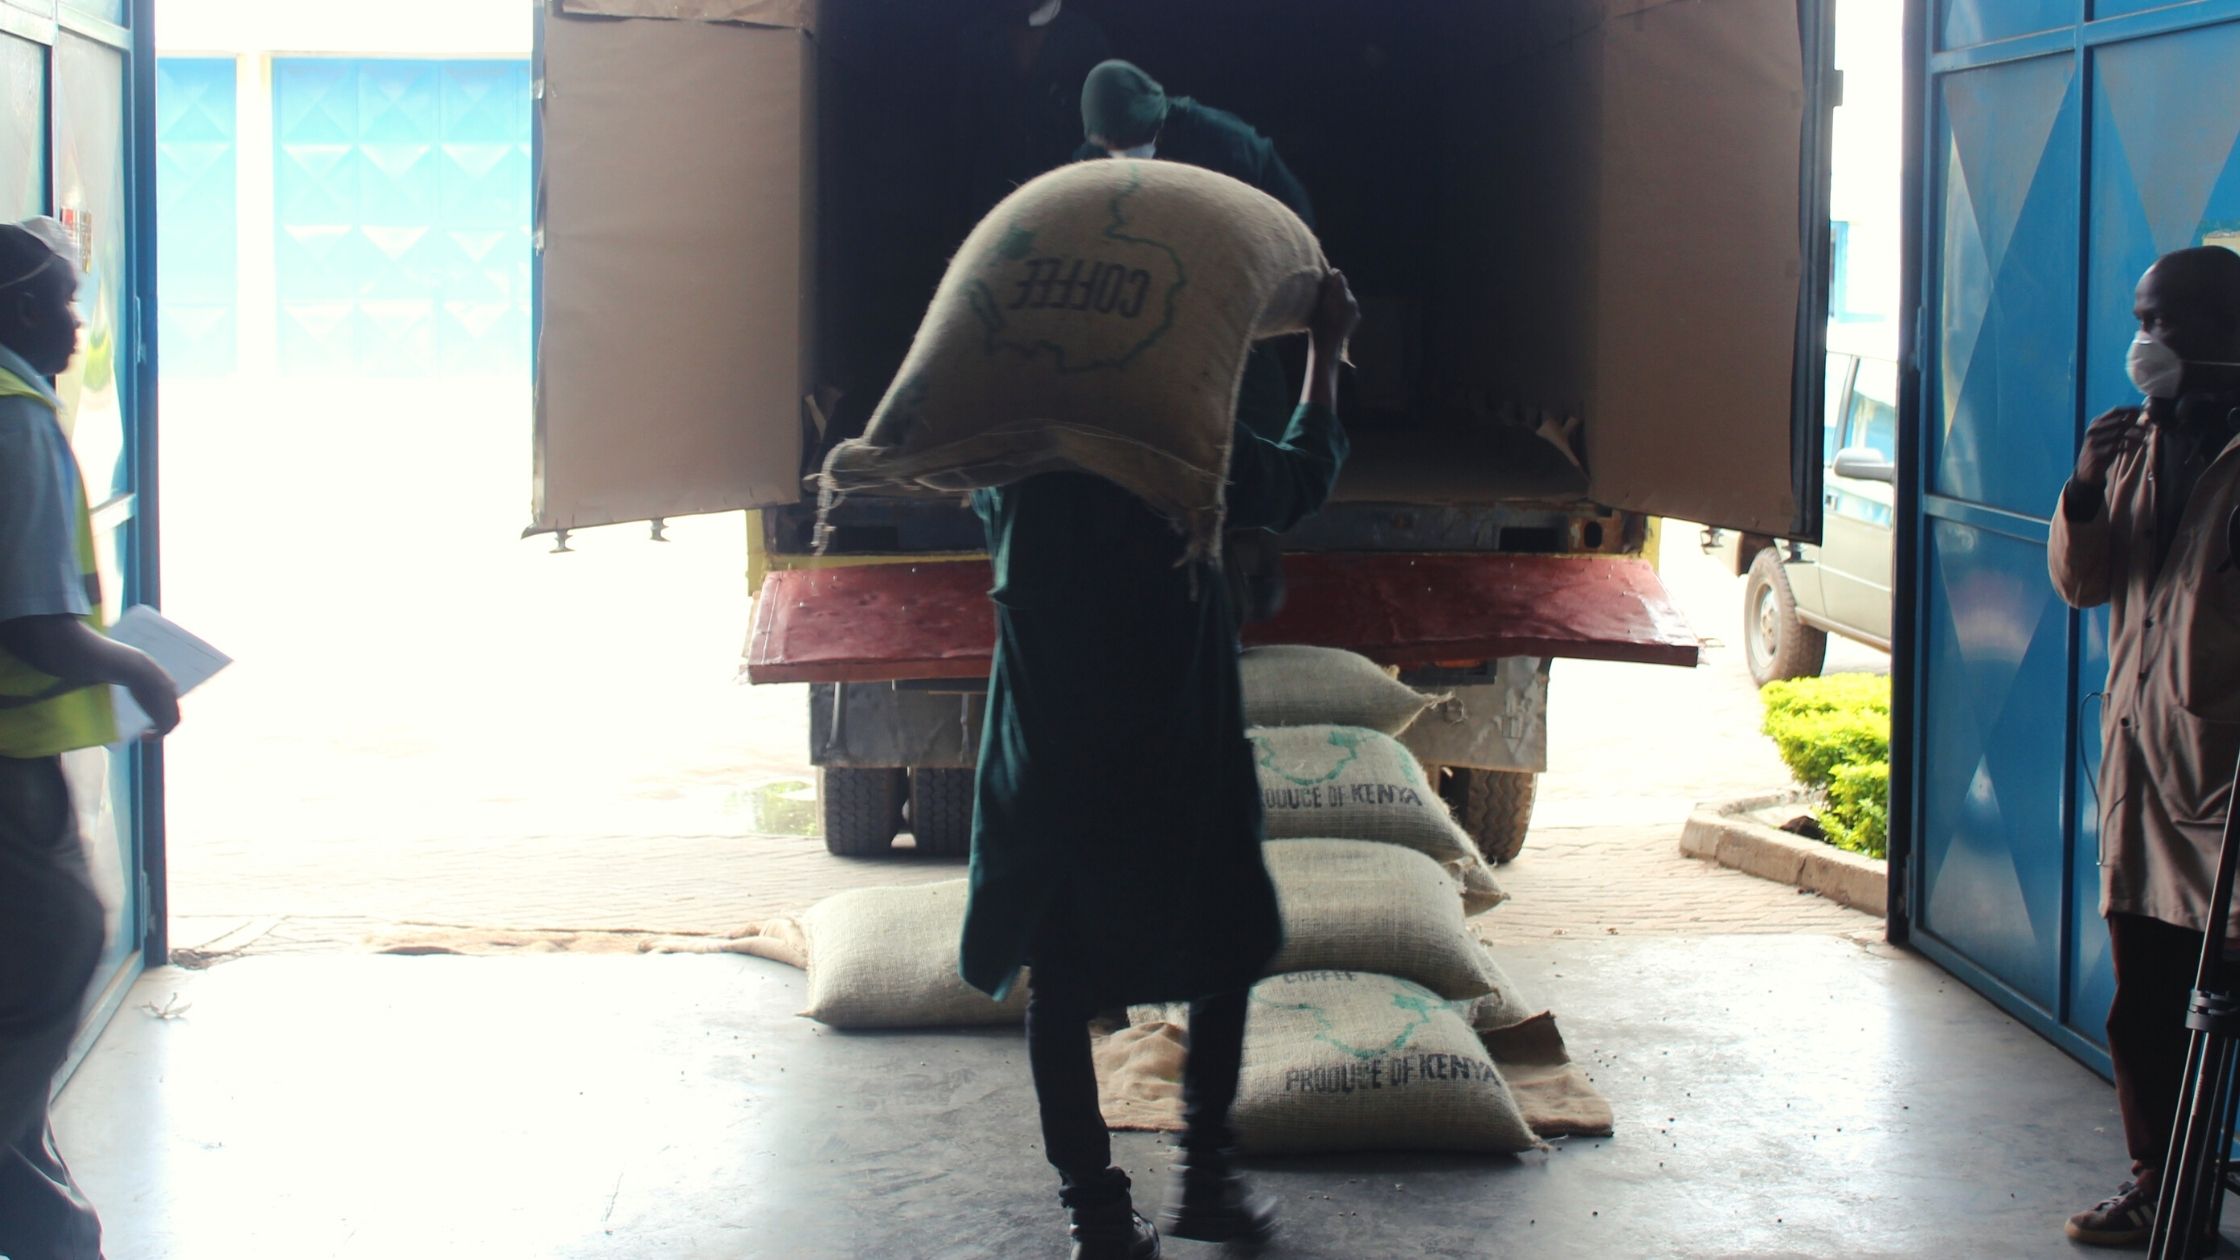 Coffee Supply Chain loading trucks